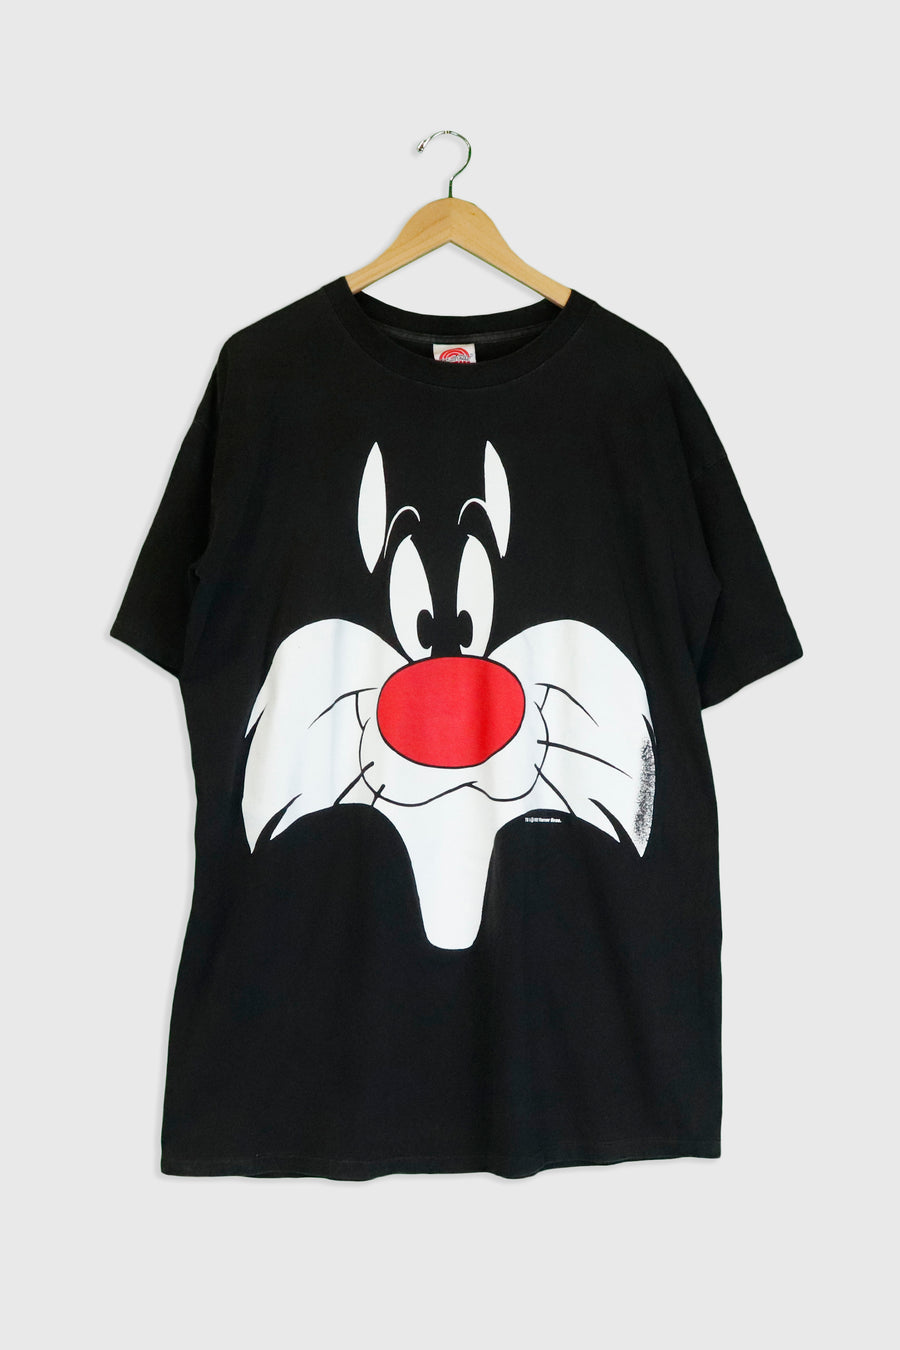 Vintage 1992 Warner Bros Looney Tunes Sylvester The Cat T Shirt Sz XL